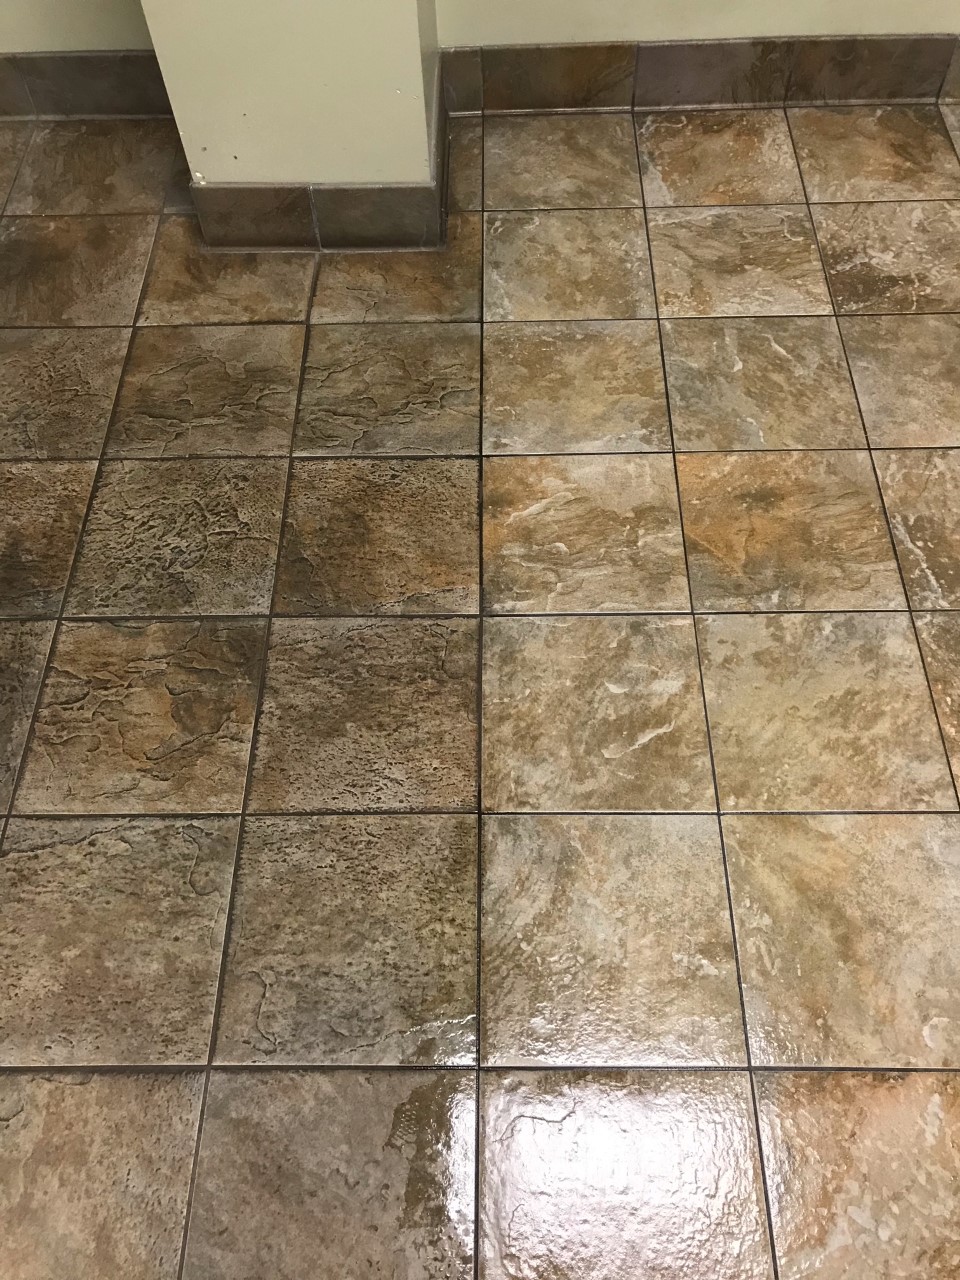 https://www.samscarpetservice.com/wp-content/uploads/2021/12/dirty-clean-tile-sidebyside.jpg